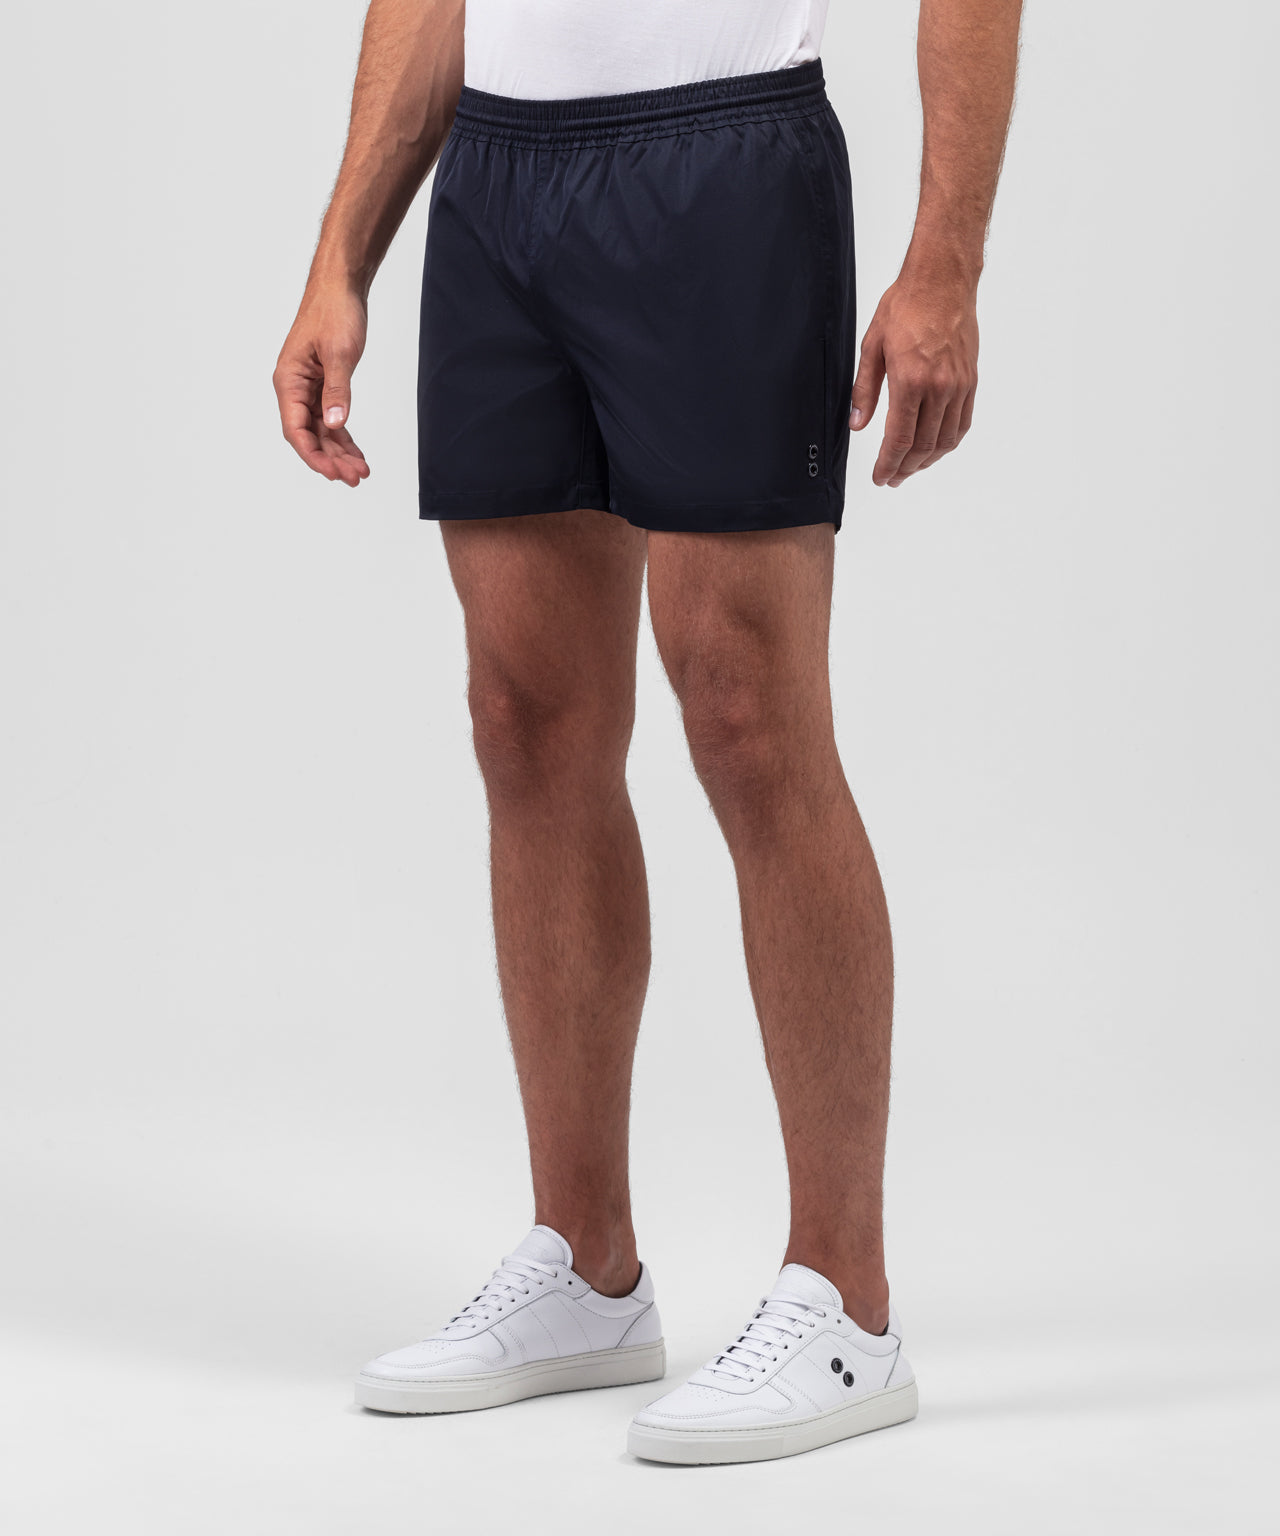 Exerciser Shorts: Navy